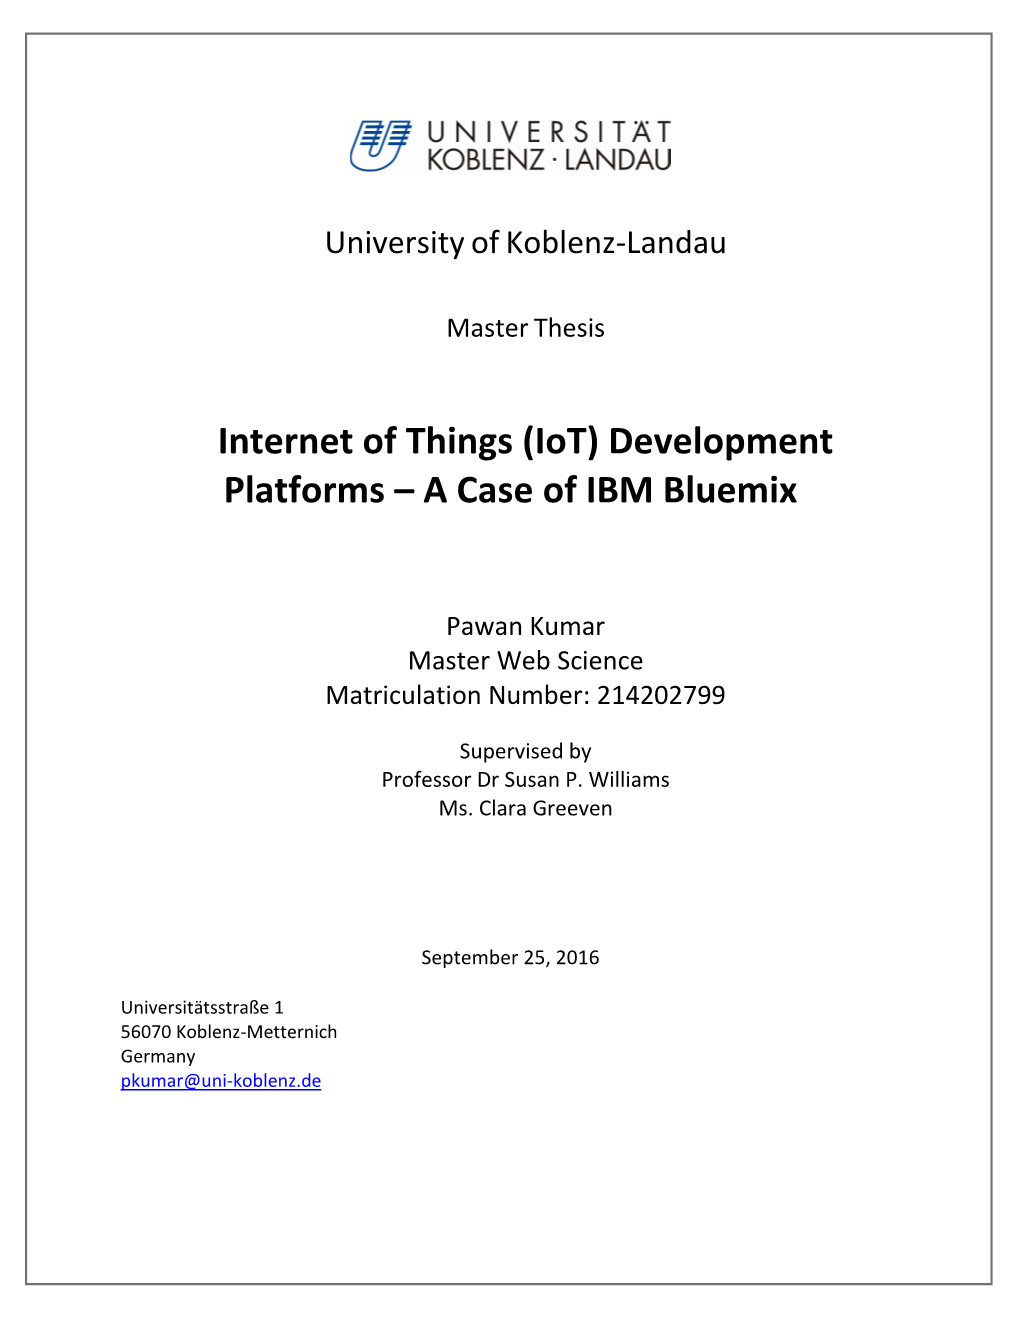 Iot Development Platforms – a Case of IBM Bluemix